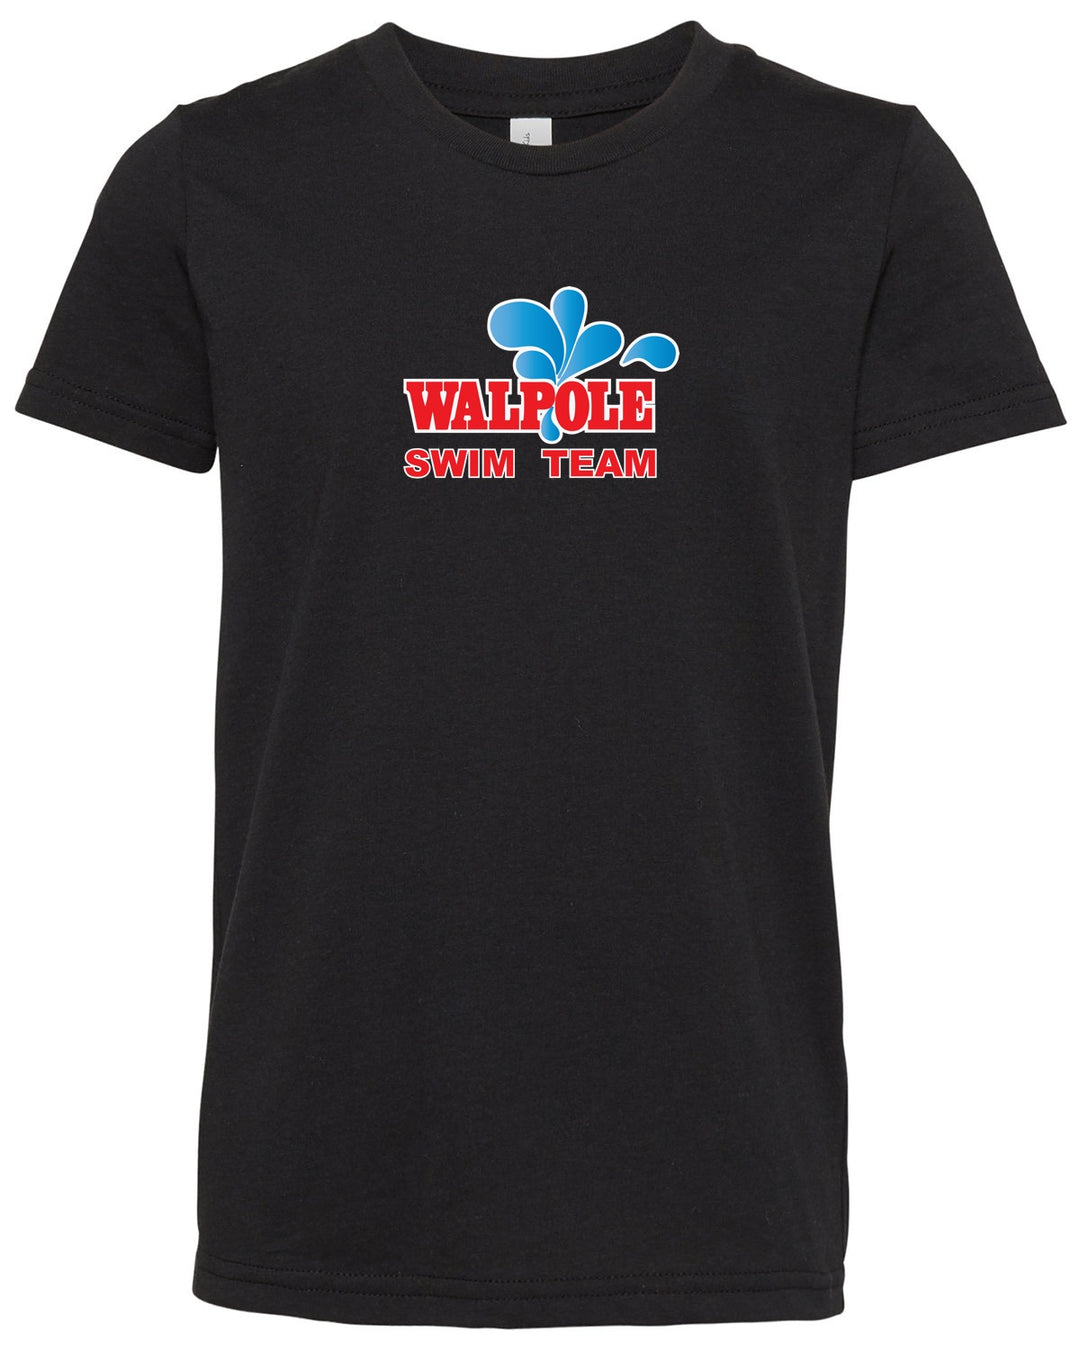 Walpole Swim - Bella + Canvas Youth Jersey T-shirt (3001Y)